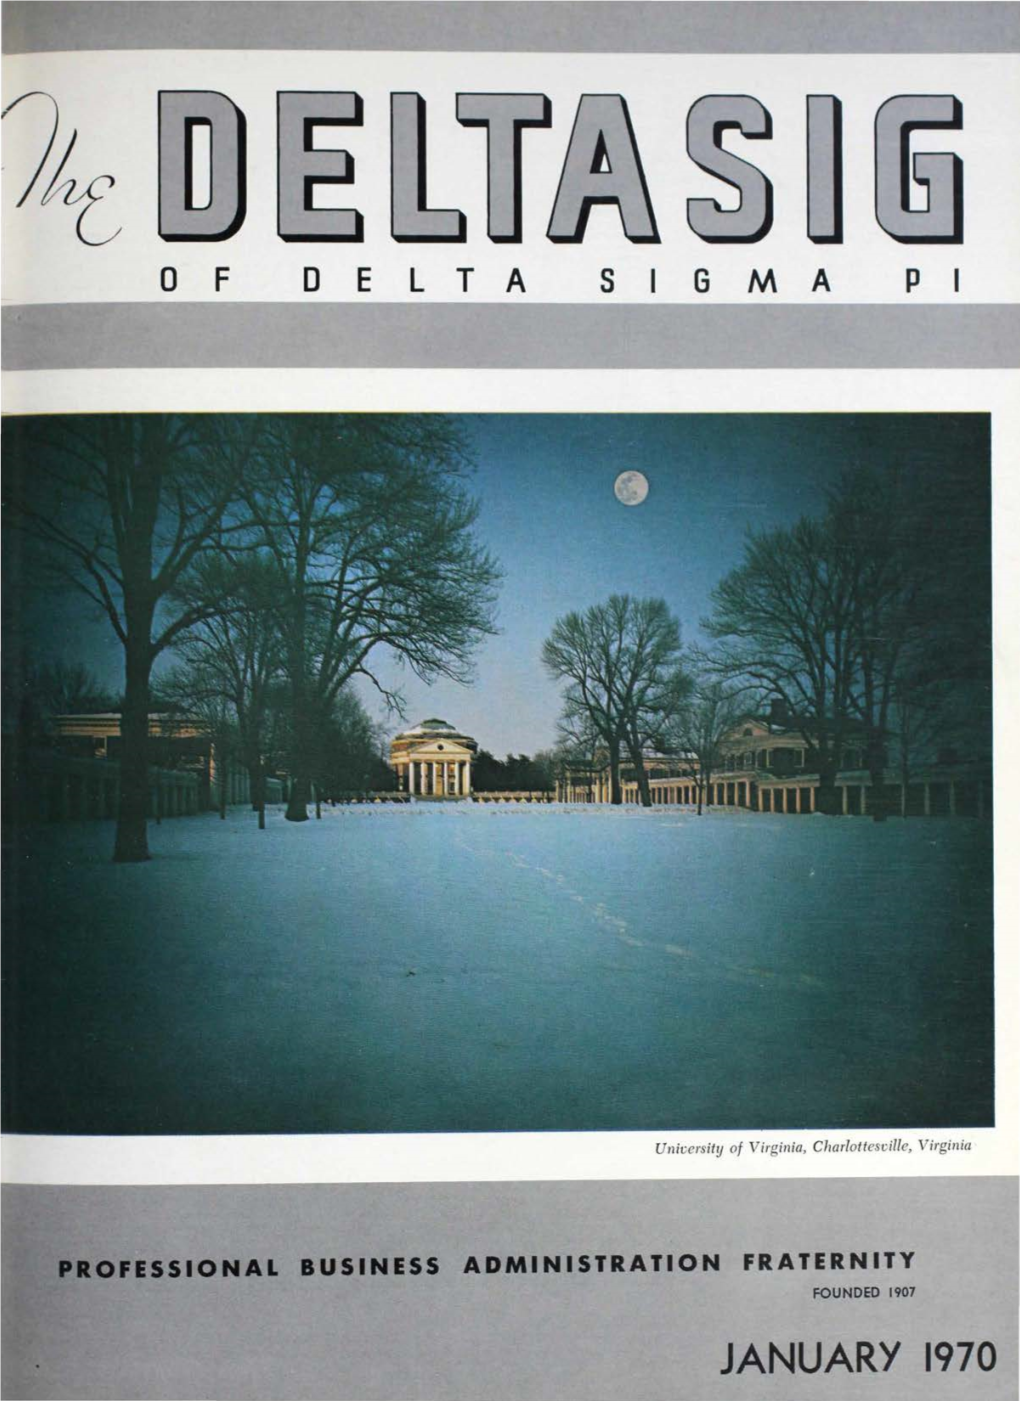 JANUARY 1970 the International Fraternity of Delta Sigma Pi